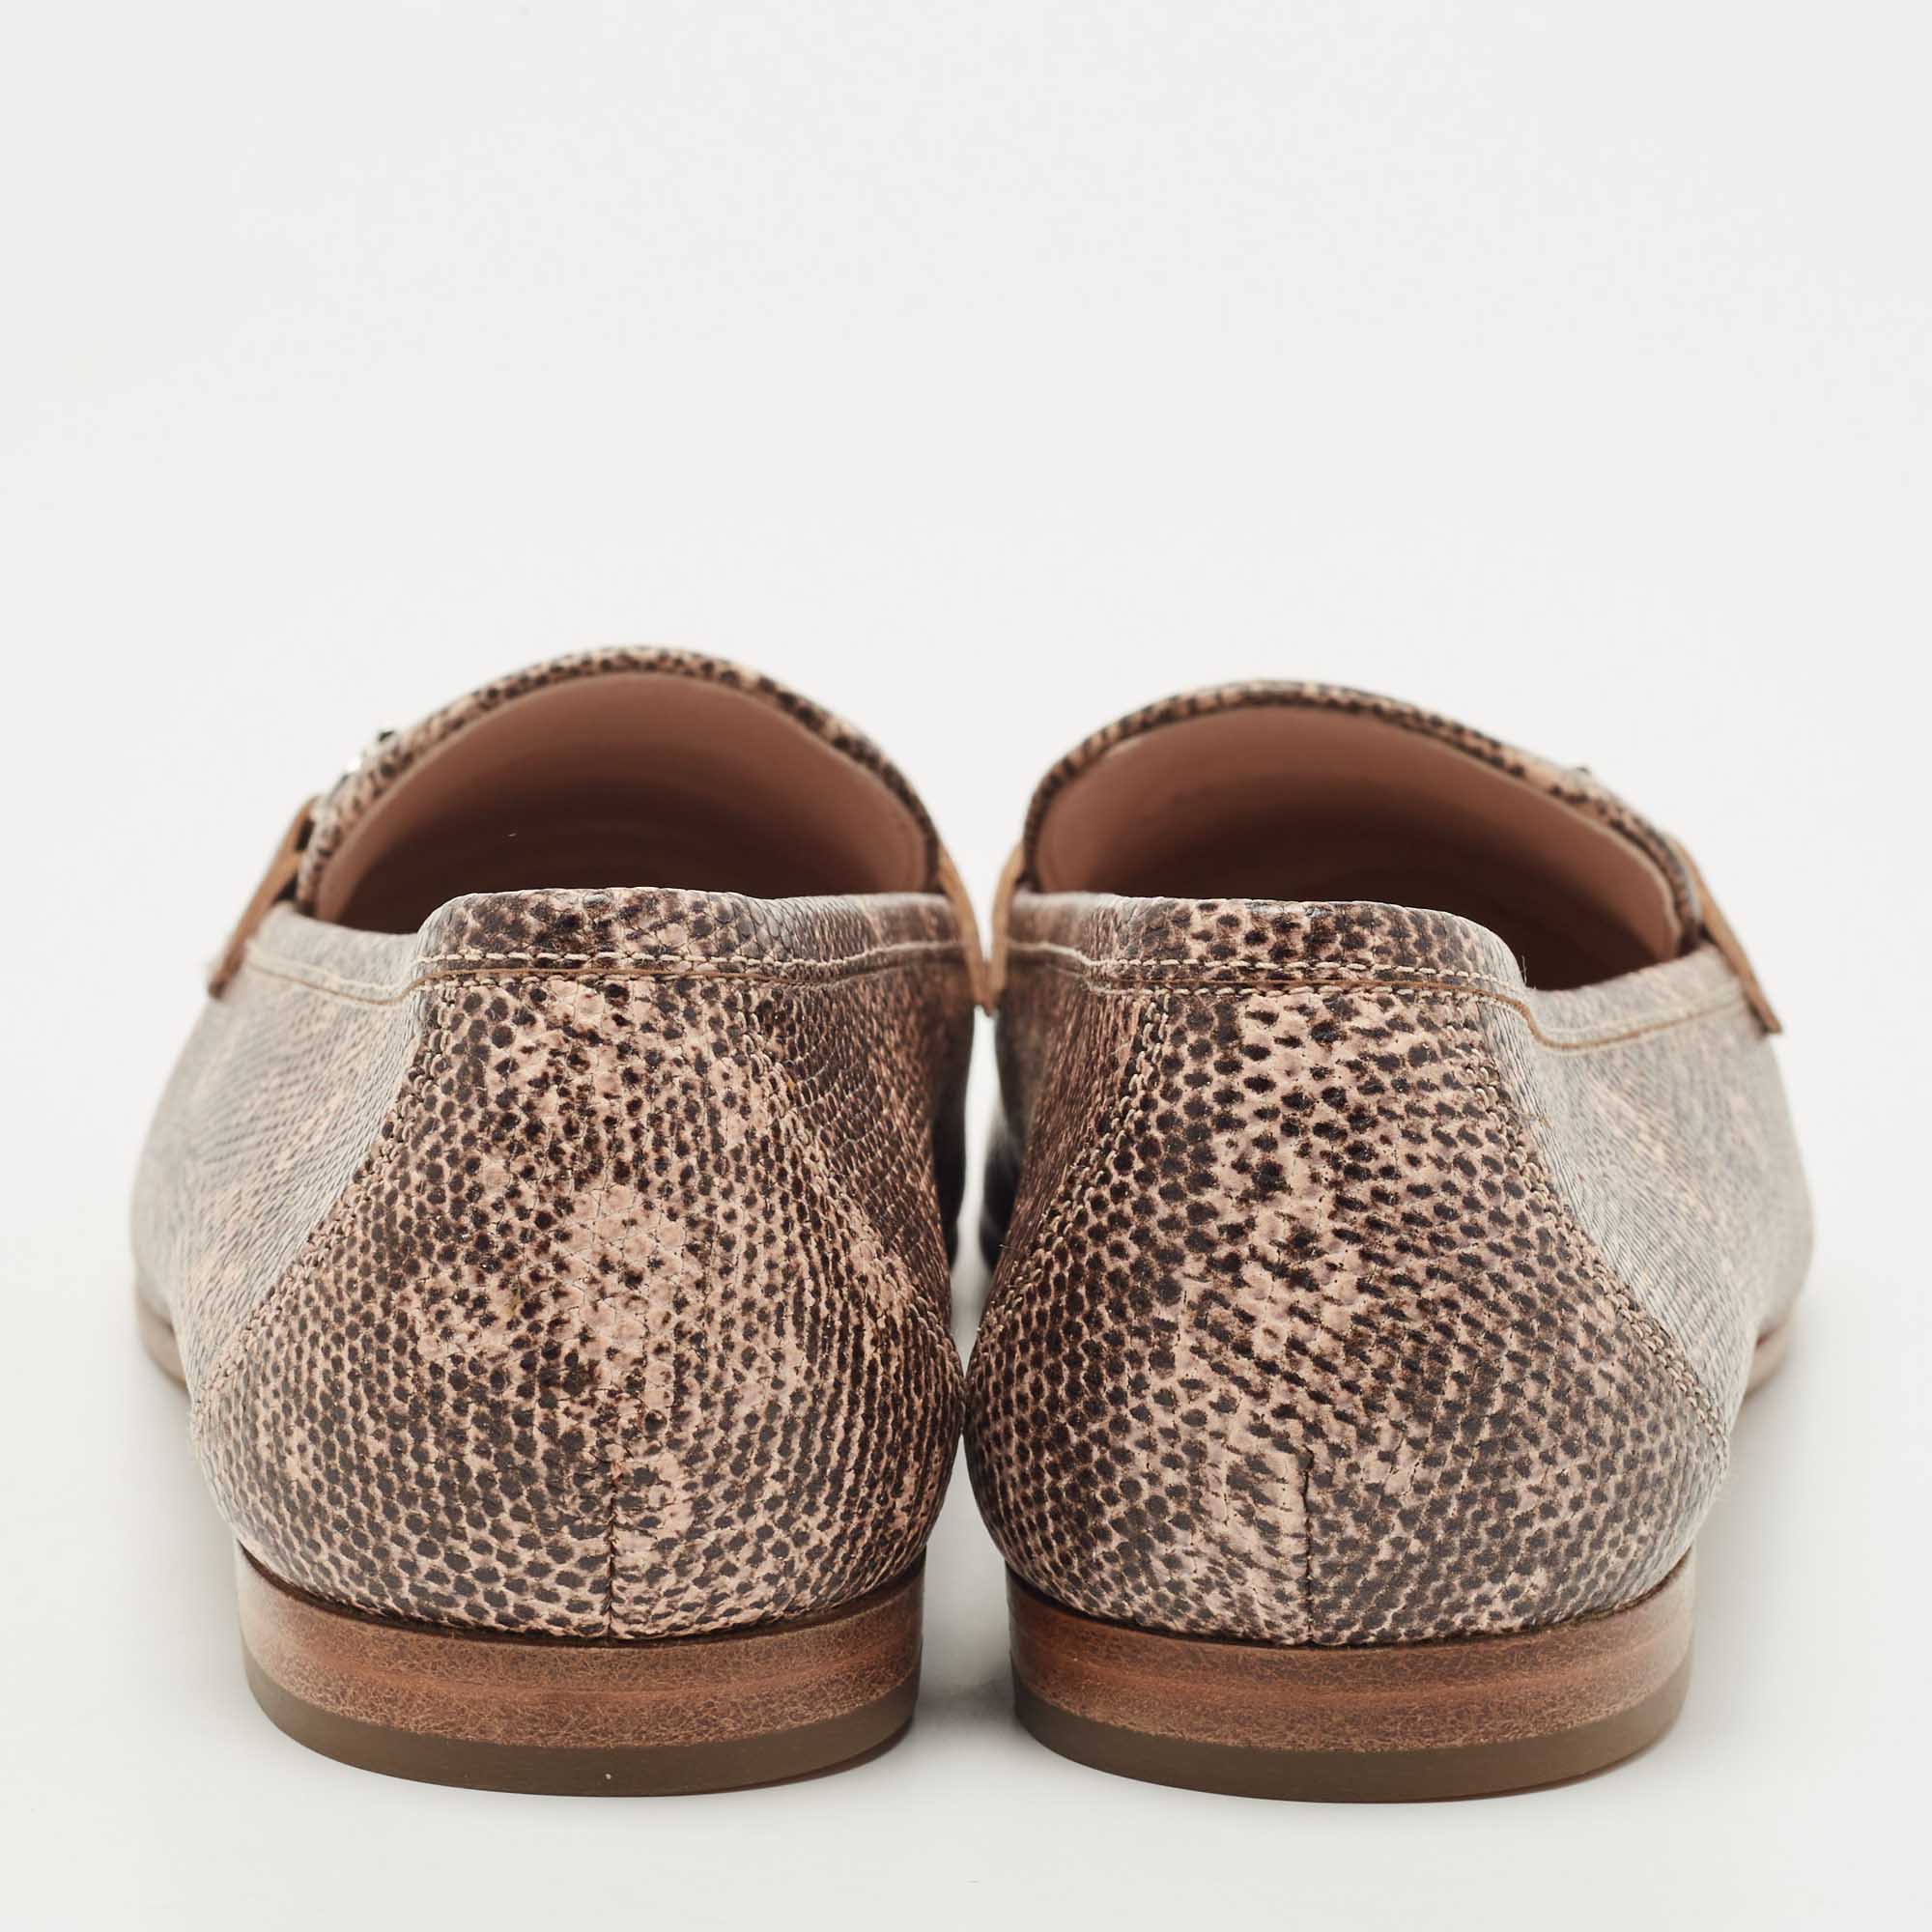 Salvatore Ferragamo Beige/Brown Lizard Embossed Leather Gancini Loafers Size 39